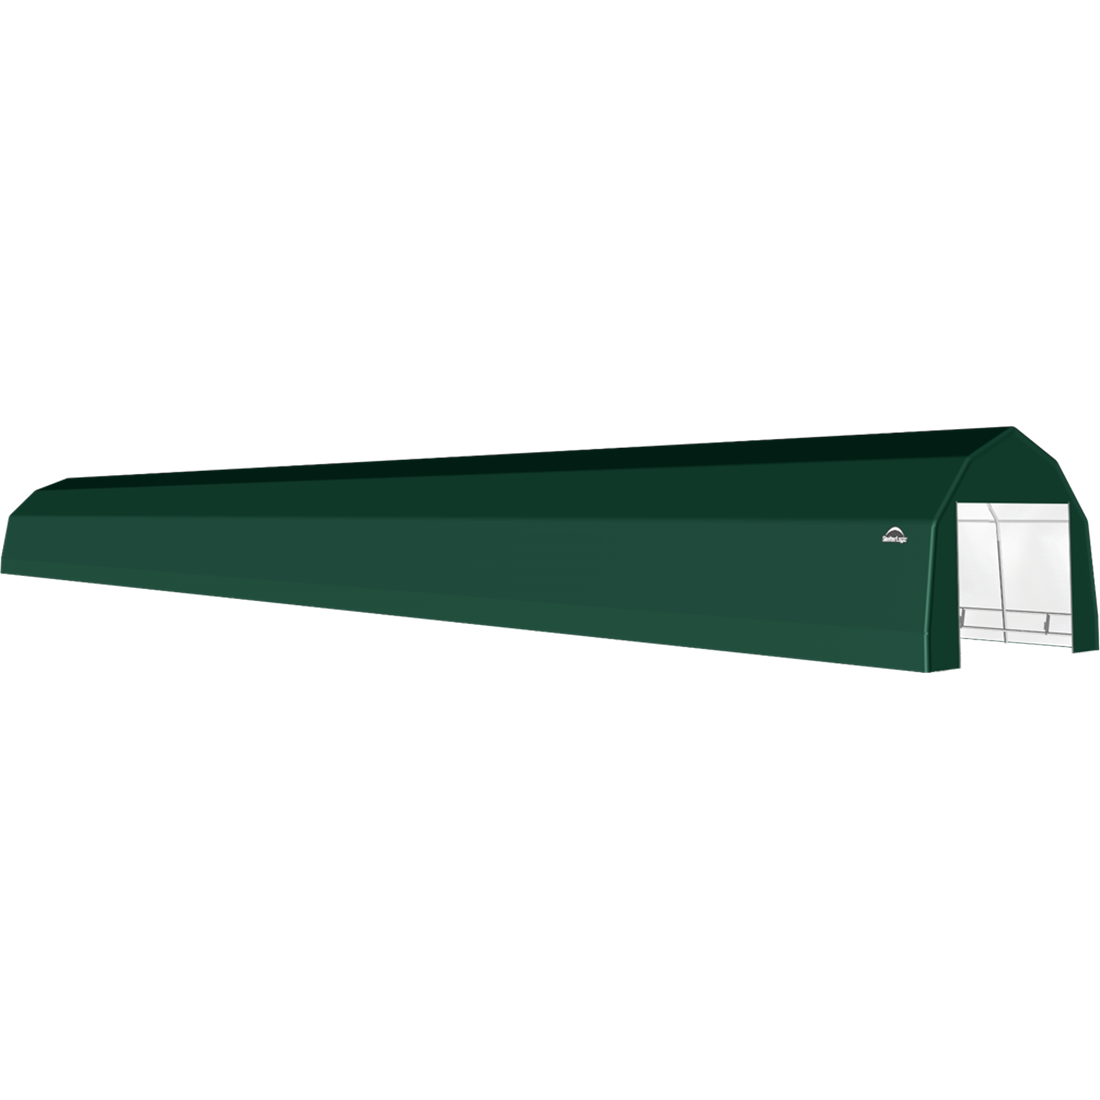 ShelterTech SP Series Barn Shelter, 12 ft. x 92 ft. x 9 ft. Heavy Duty PVC 14.5 oz. Green